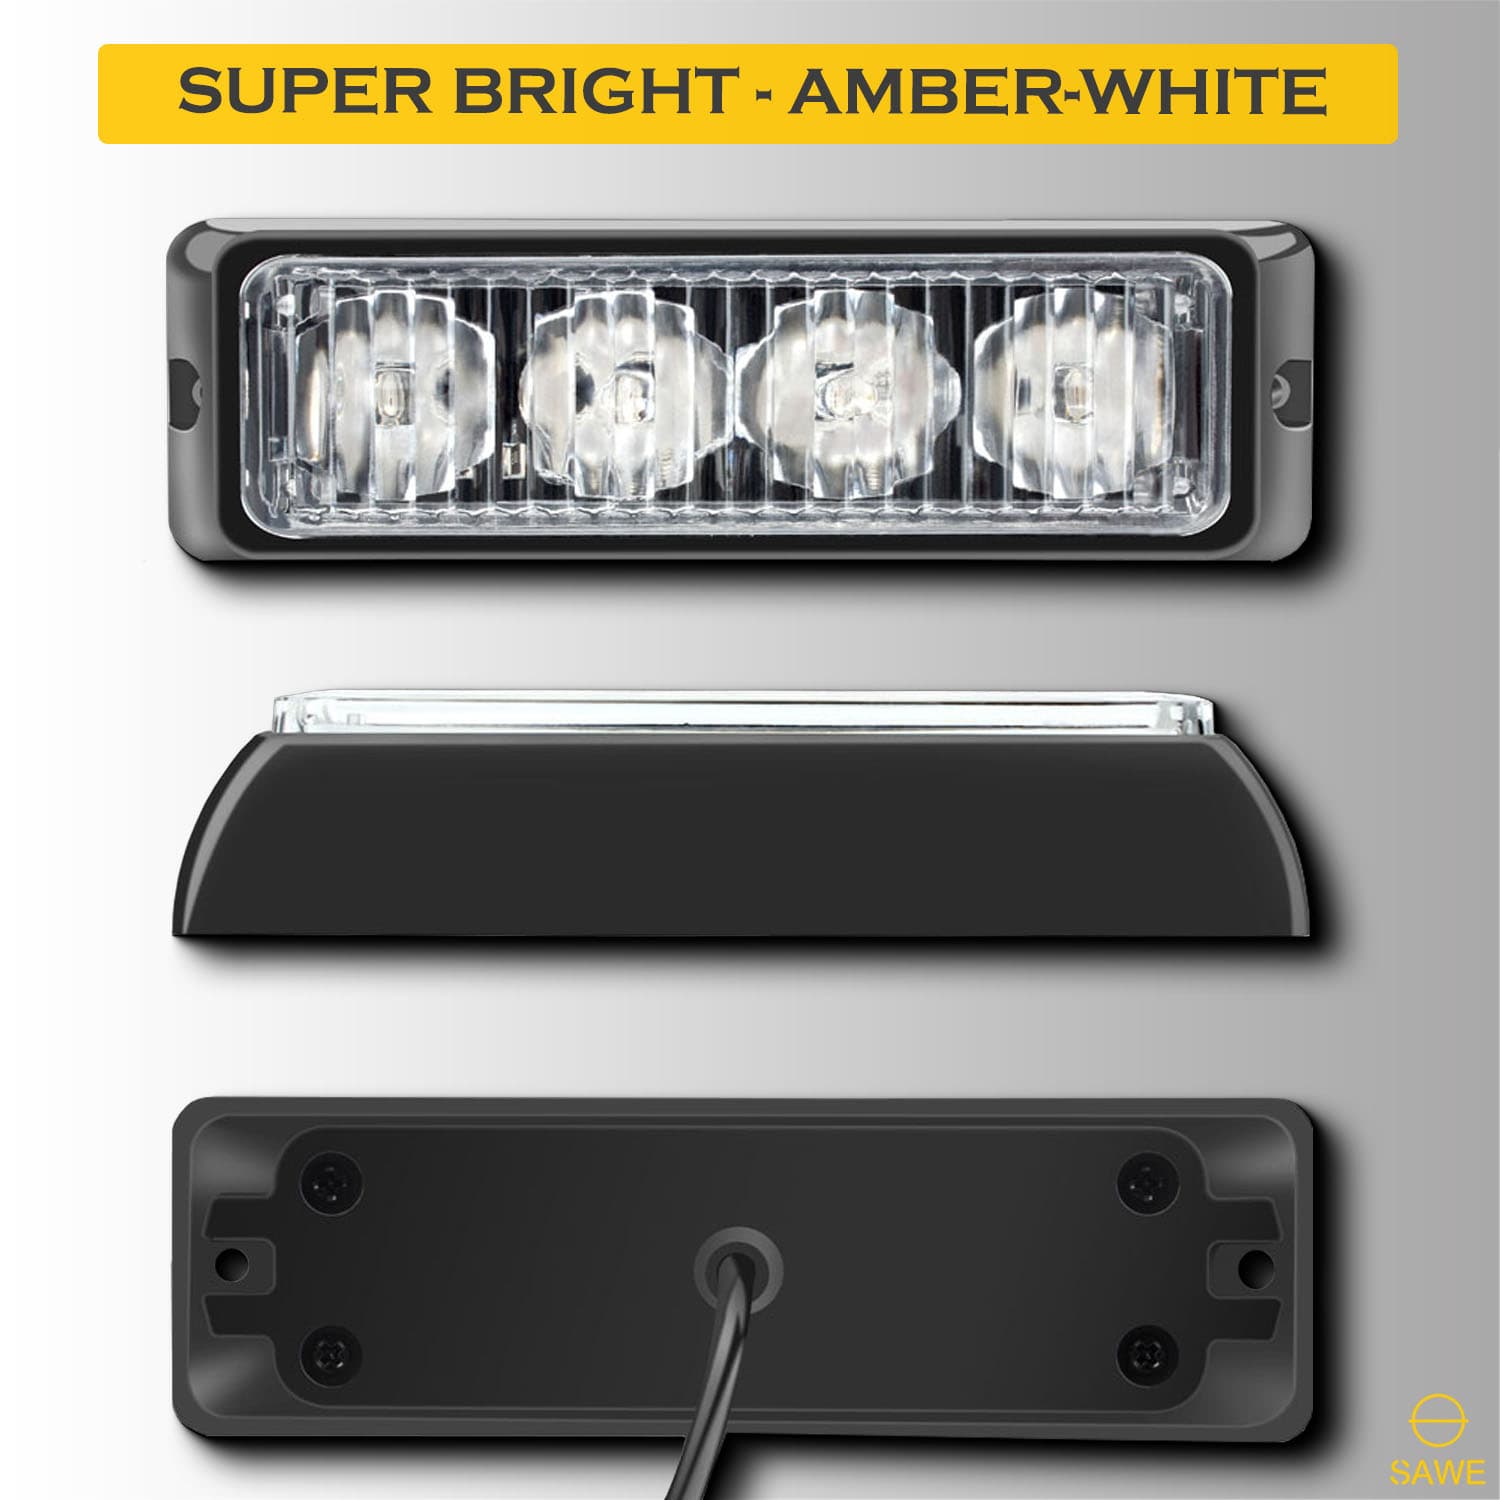 Premier Emergency LED Strobe Lights Bar for Offroad Car Truck Warning Hazard Flash Grille and Surface Mount Light - Amber / White 4-LED